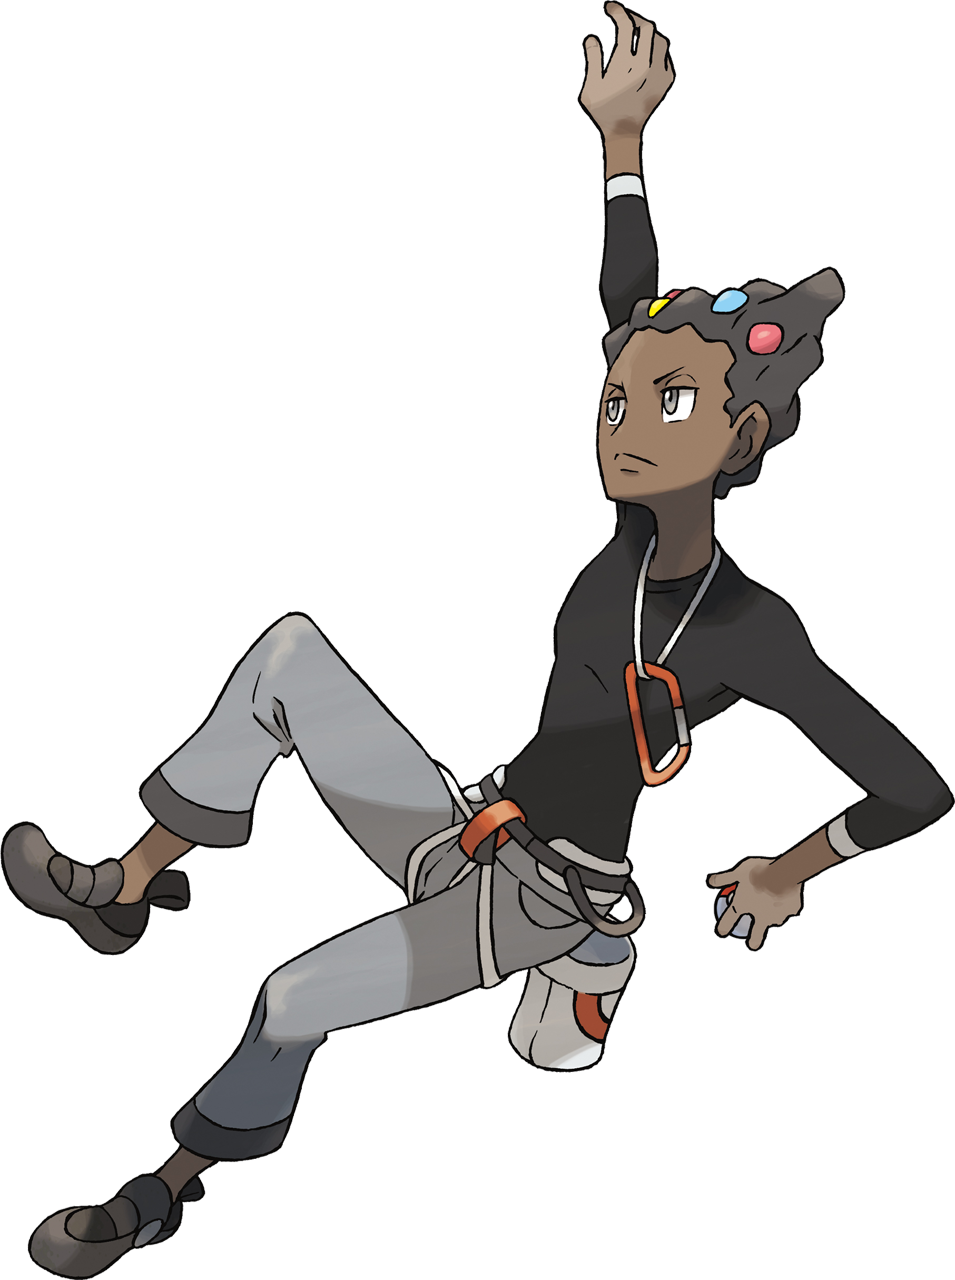 Pokémon20th: Os líderes de ginásio de Hoenn - Nintendo Blast